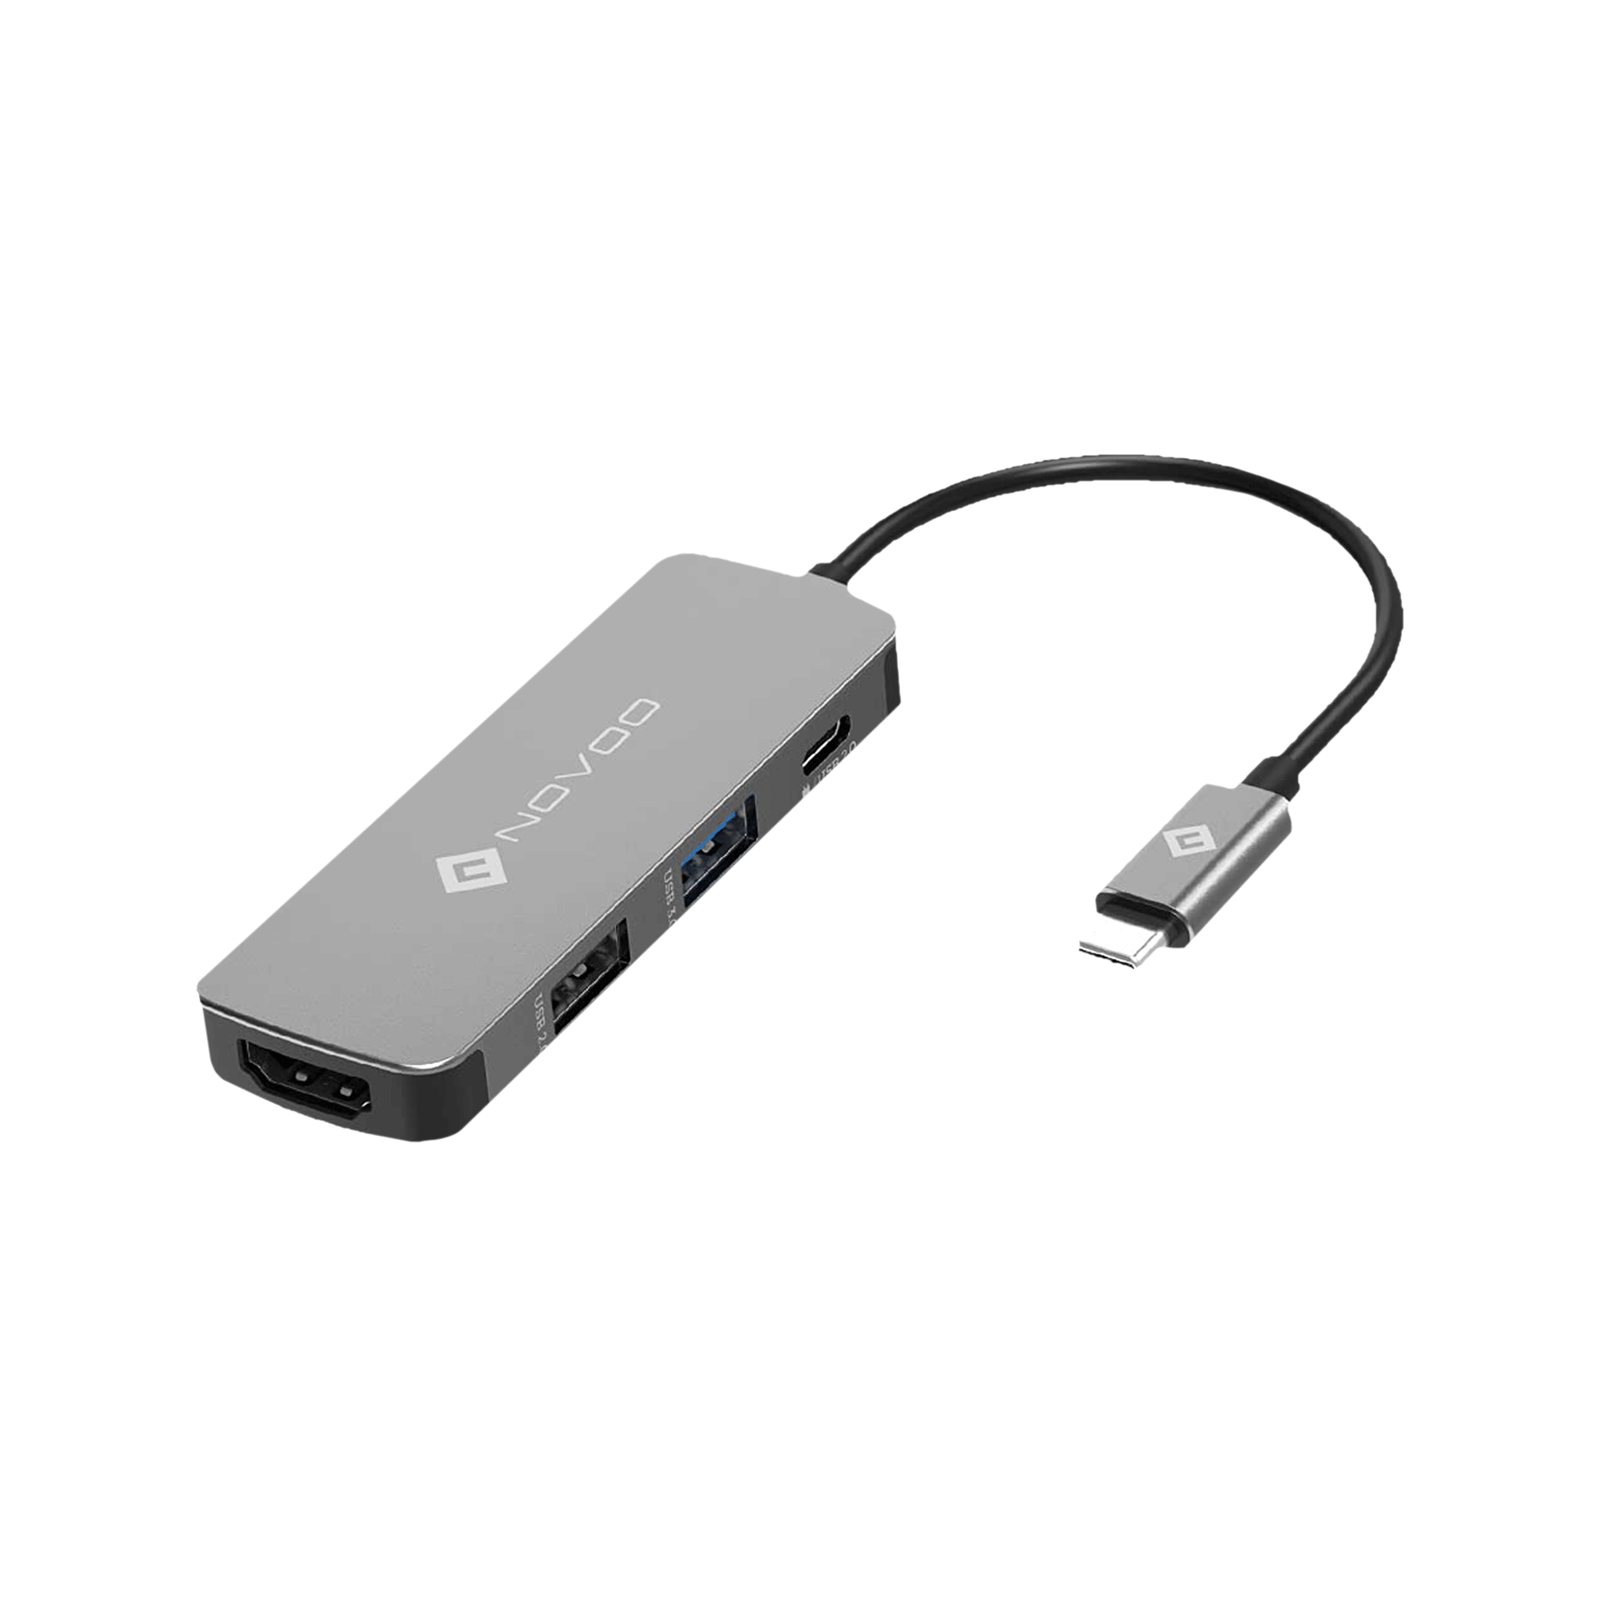 Buy Novoo 4-in-1 USB 3.0 Type C to USB 2.0 Type C, USB 3.0 Type A